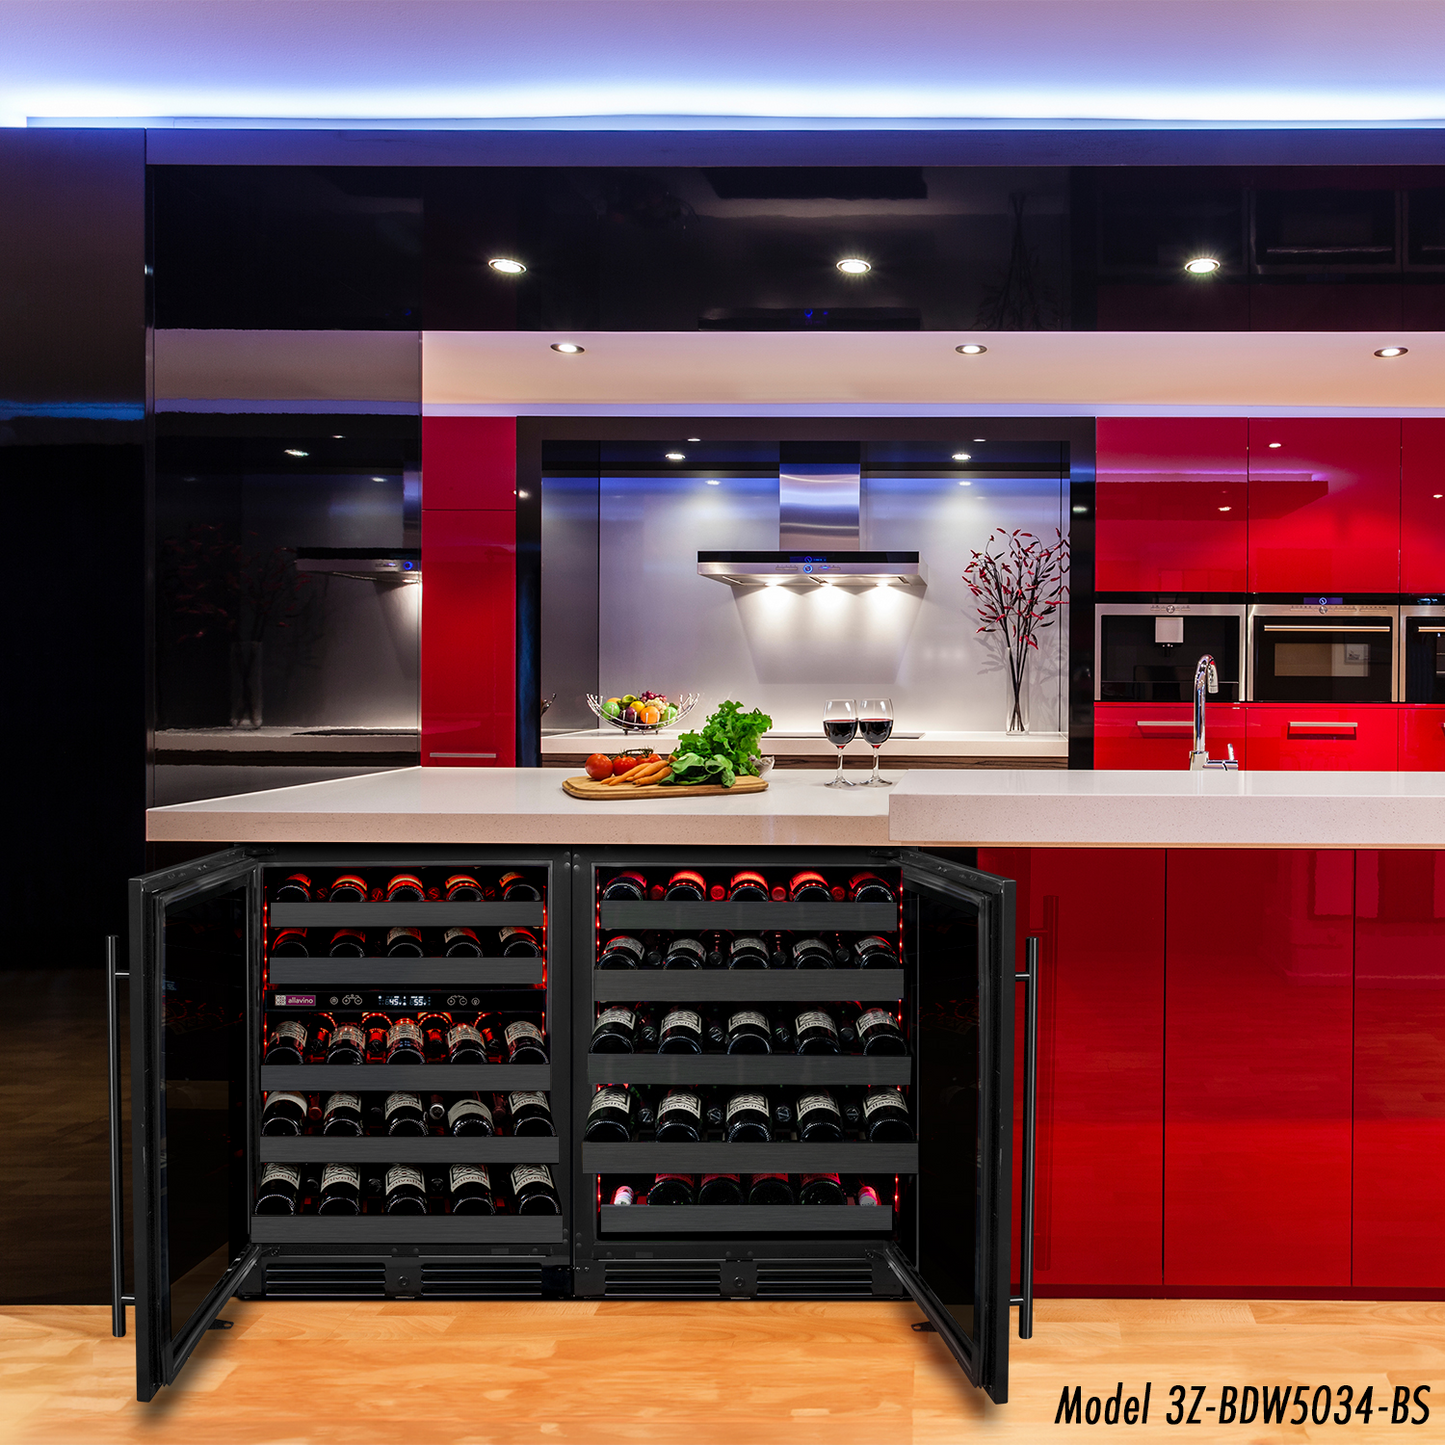 Allavino Reserva Series 50 Bottle Single Zone Built-in  Luxury Wine Refrigerator with Black Stainless Steel Door- Right Hinge